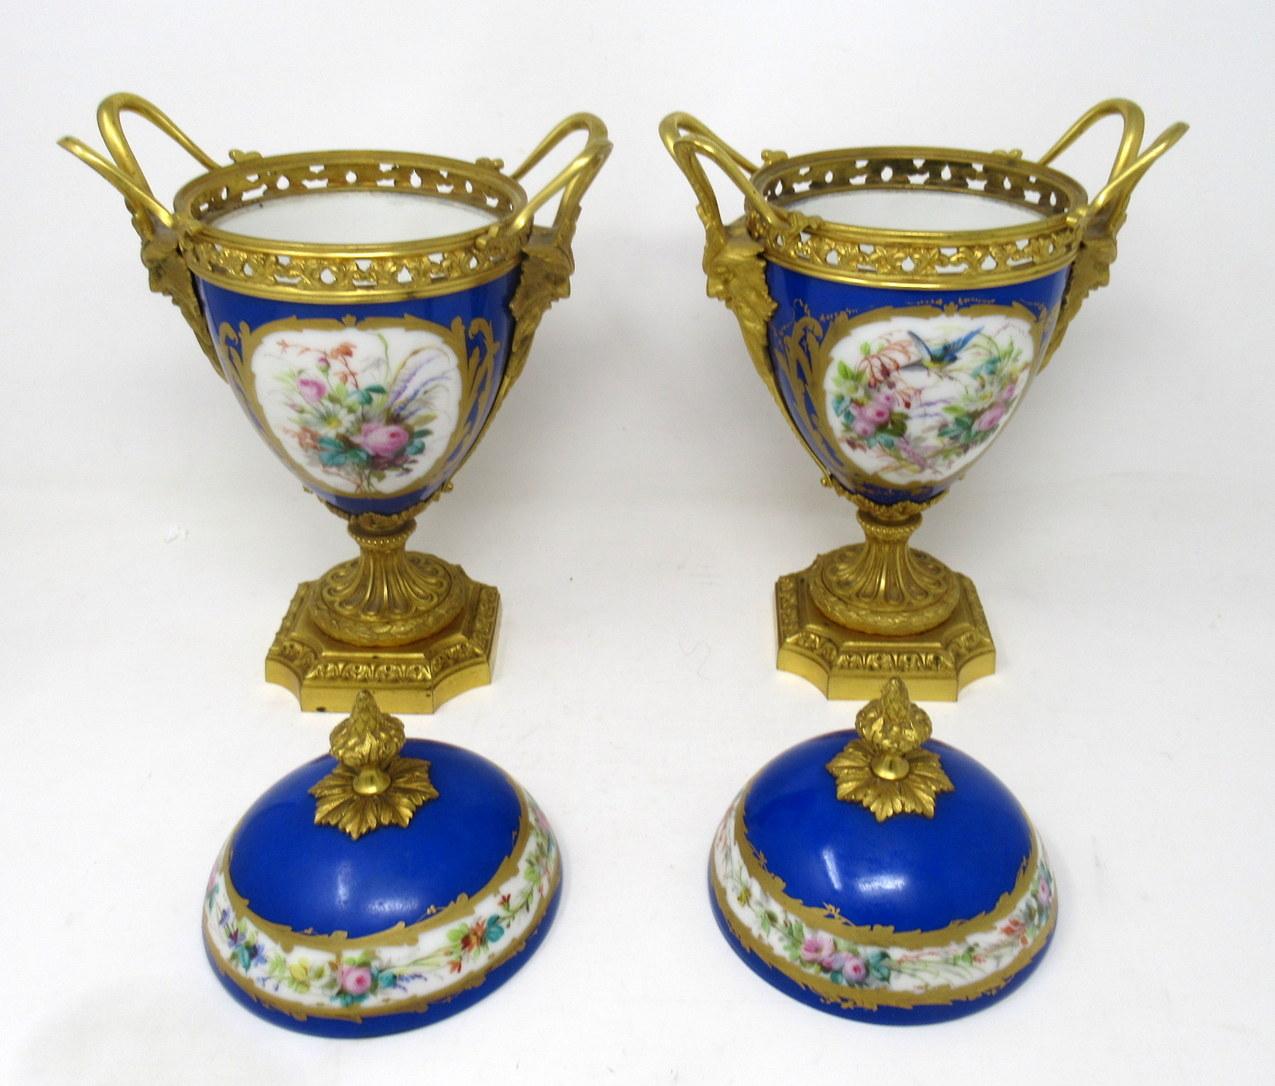 19th Century Antique Pair of Sèvres Porcelain Still Life Ormolu Cobalt Blue Urns Vases